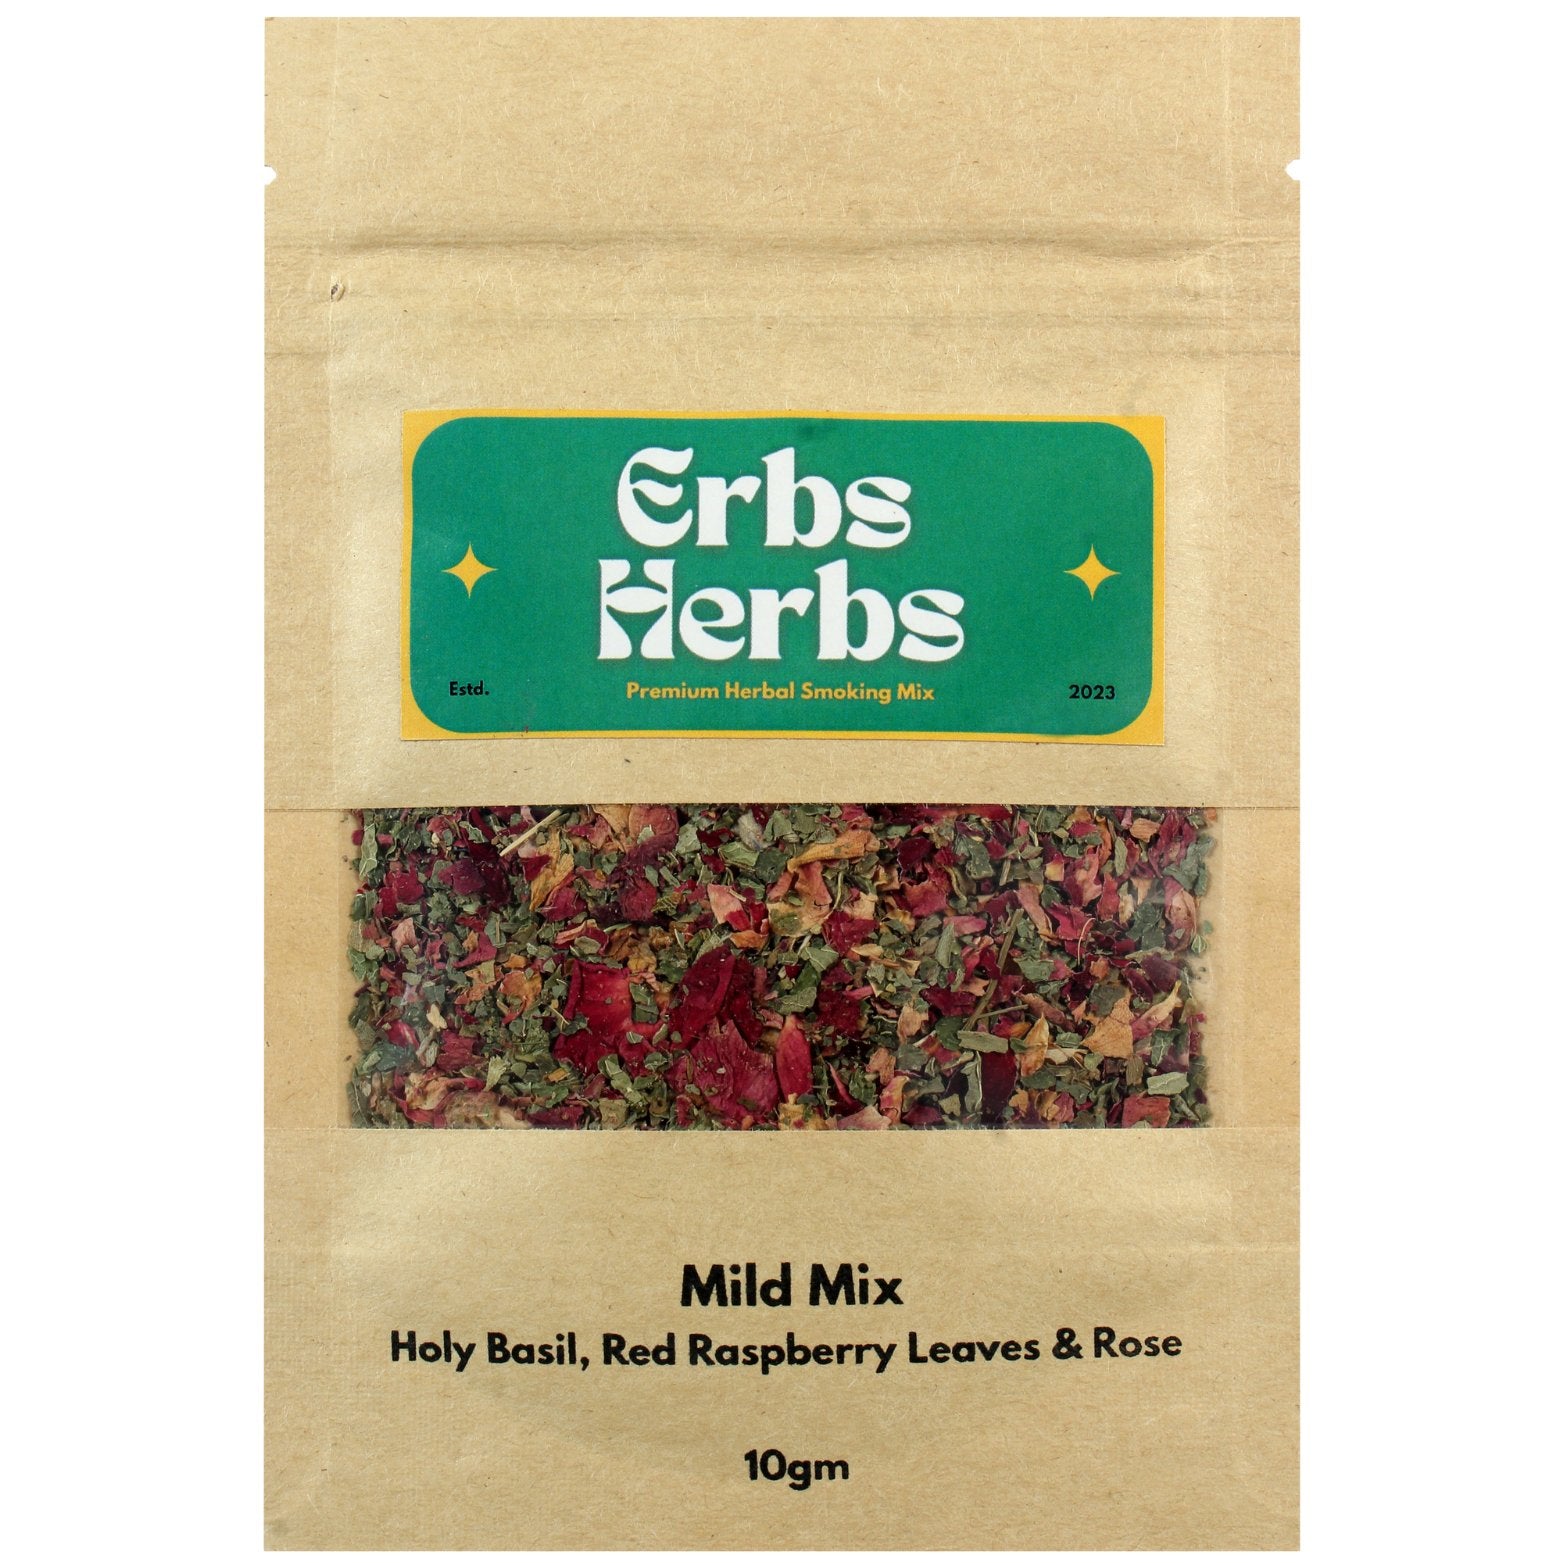 ErbsHerbs - Mild Mix Pack of 1 - CBD Store India